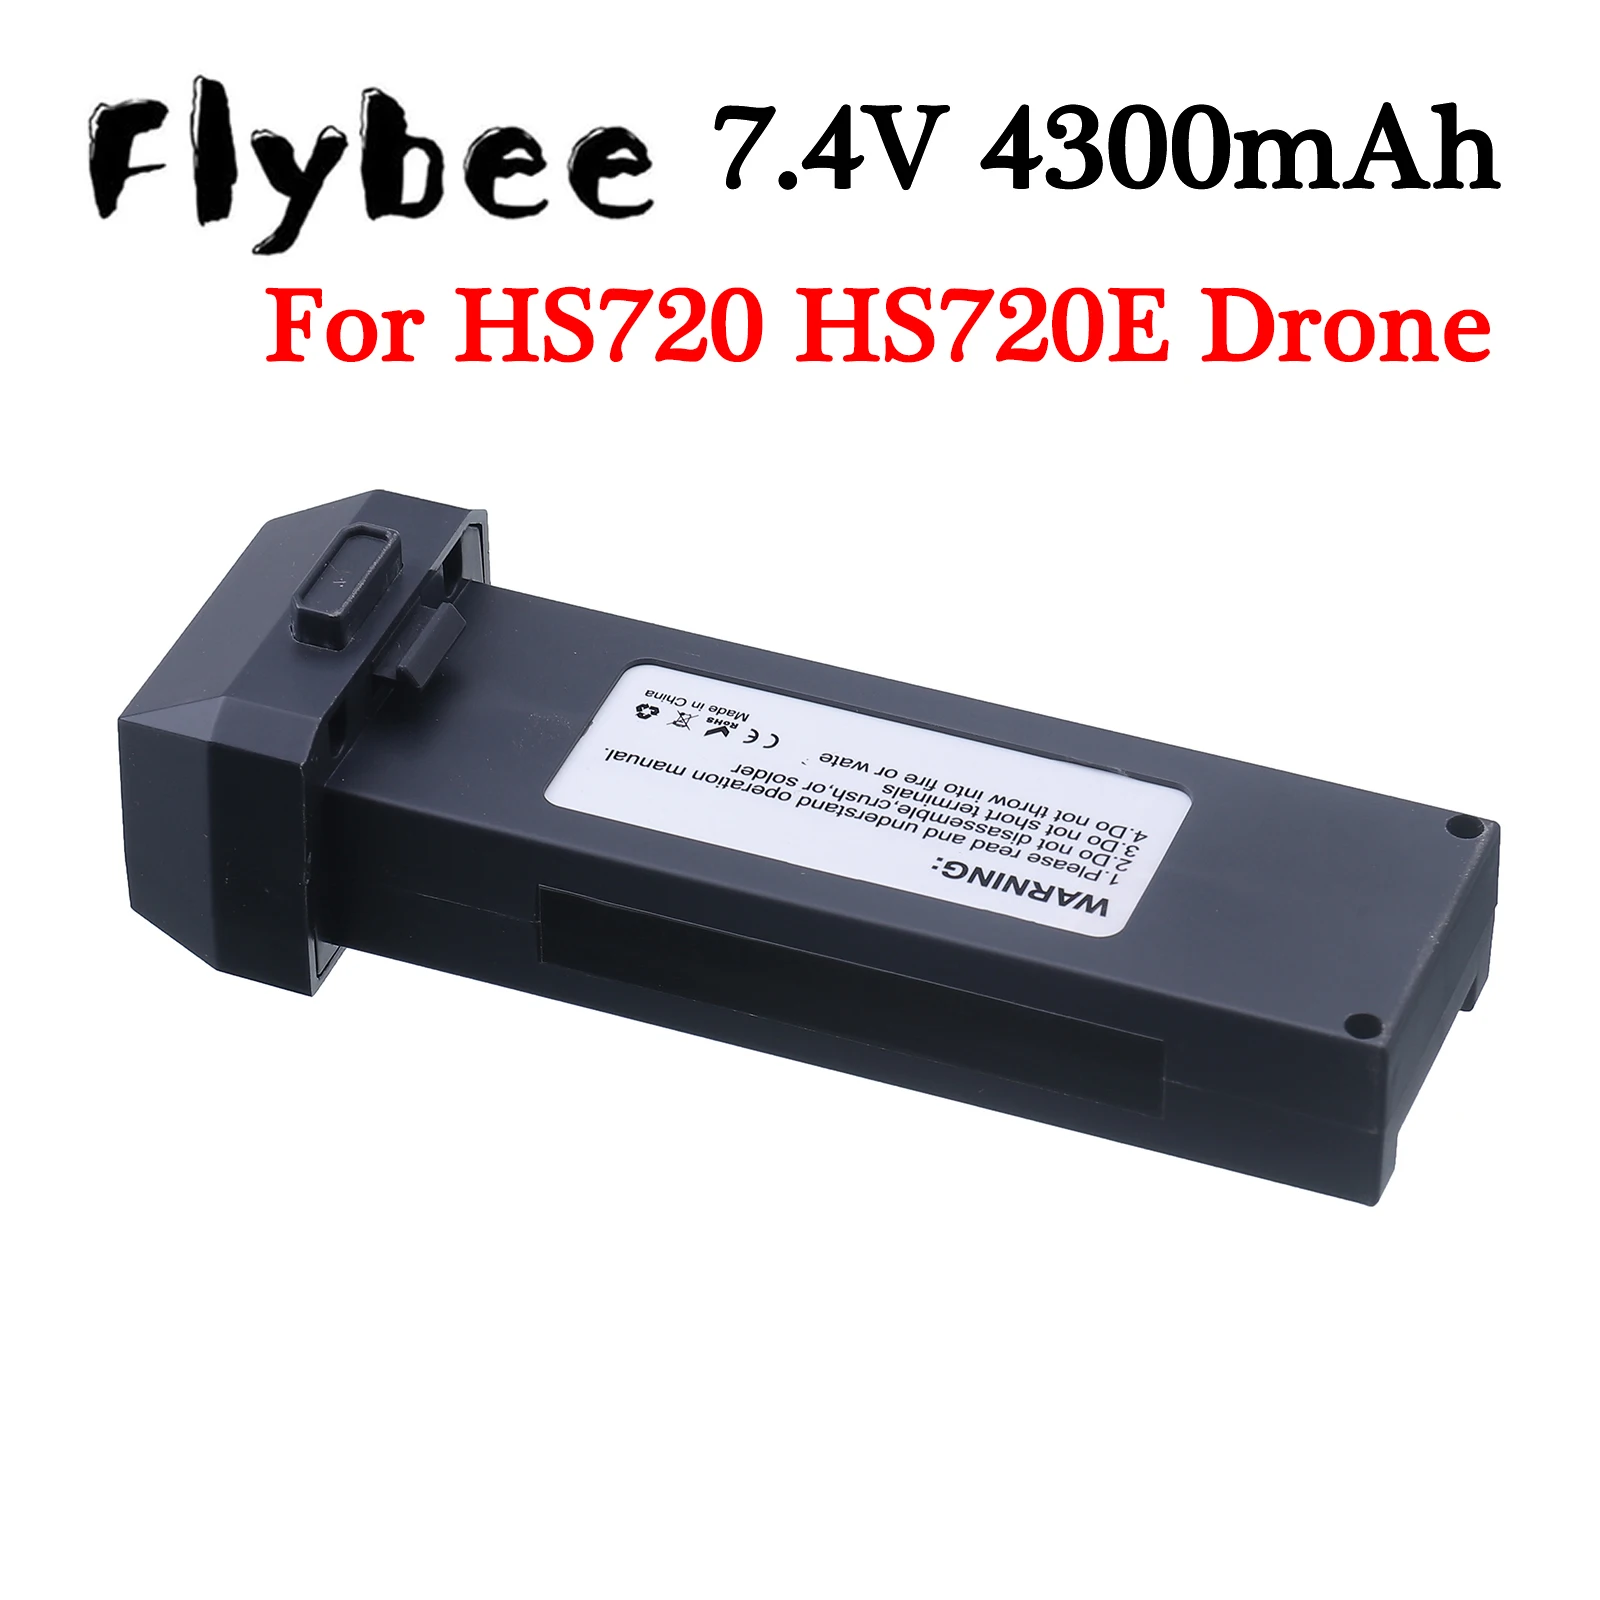 

Upgrade 7.4V 4300mah Lithium Battery for HS720 HS720E Folding Brushless Quadcopter Accessory Remote Control UAV Drone Battery